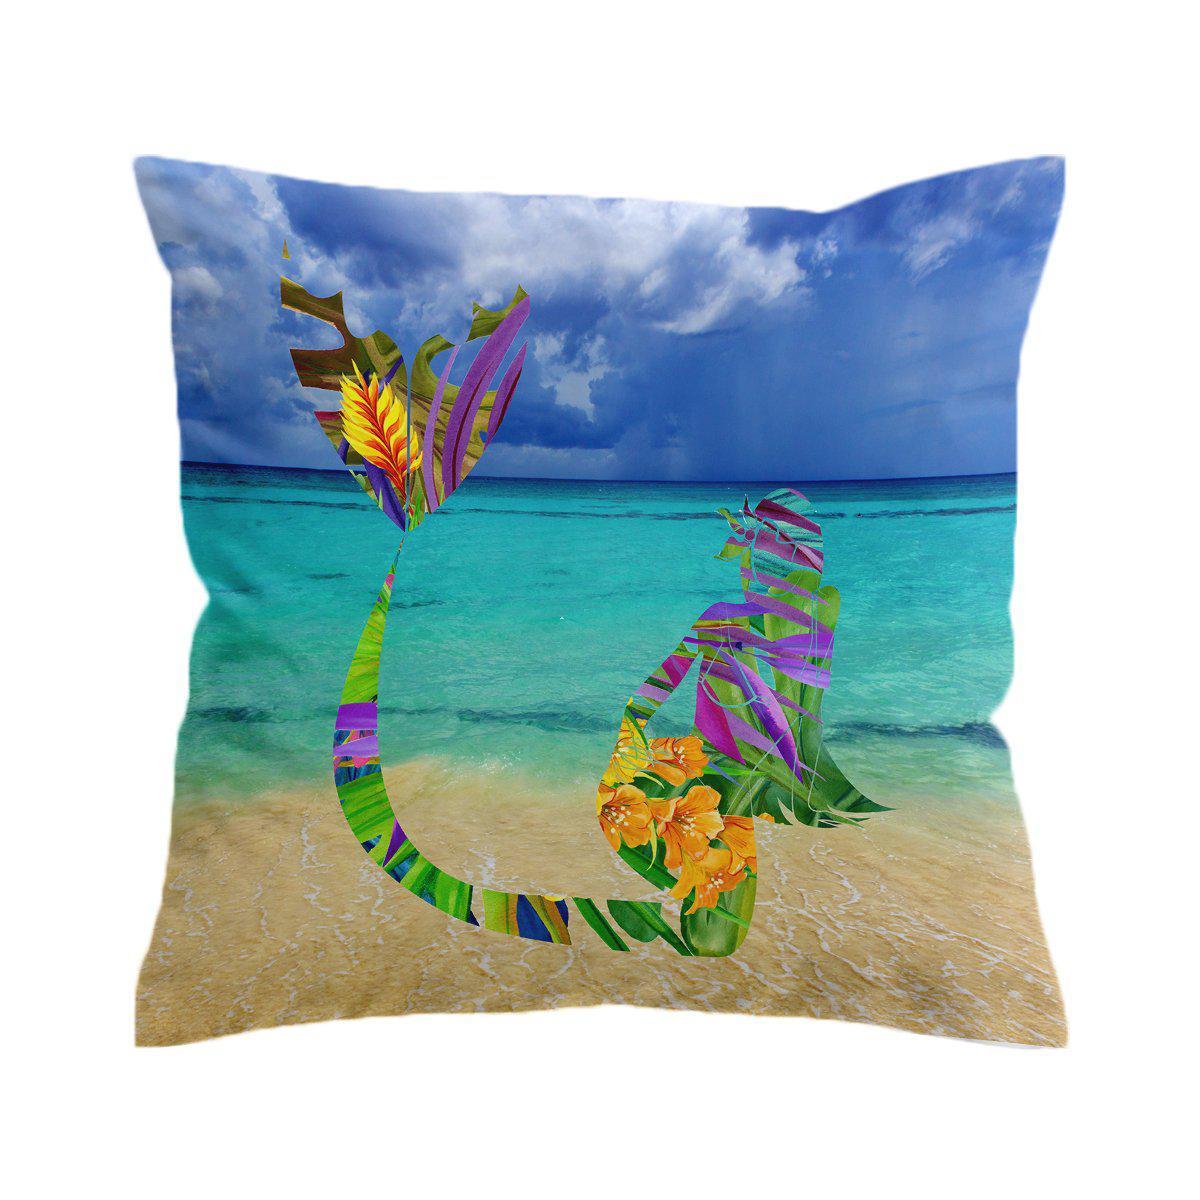 Mermaid Bay Pillow Cover